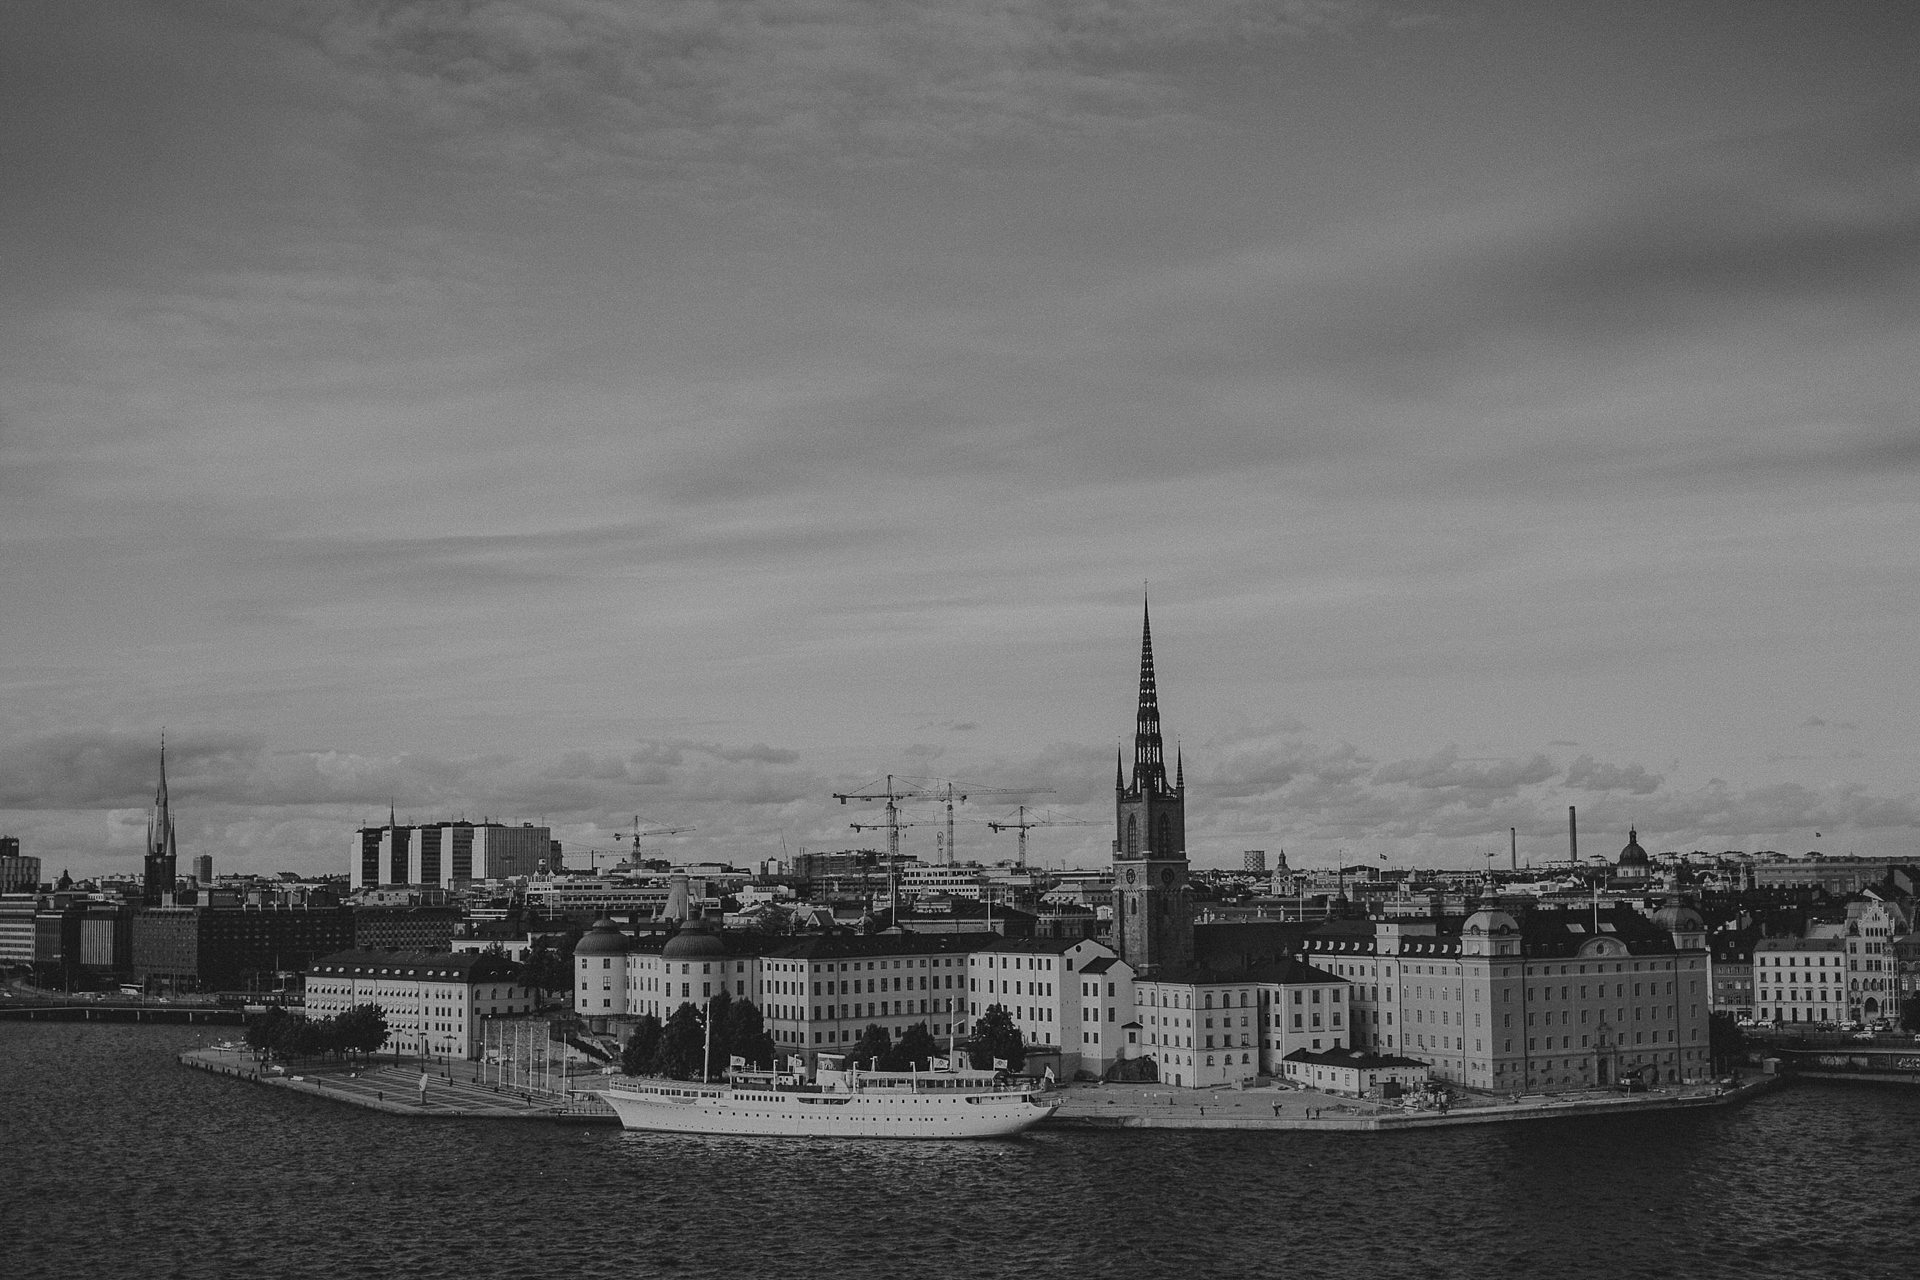 Stockholm Gamla stan city view